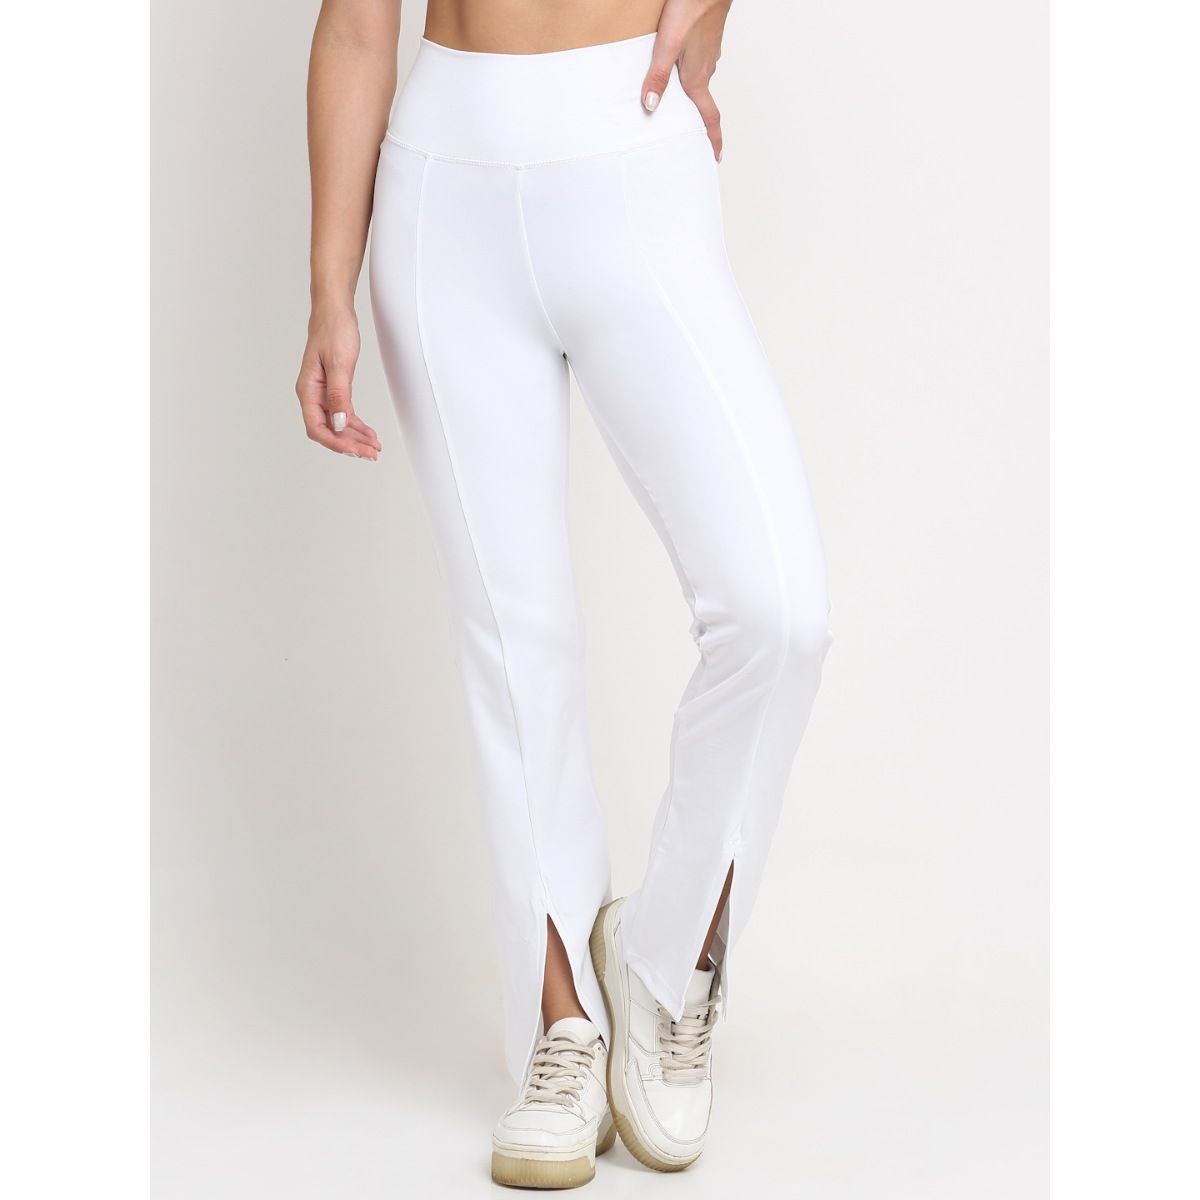 Buy EVERDION White High Waist Slit Flare Yoga Pants Online